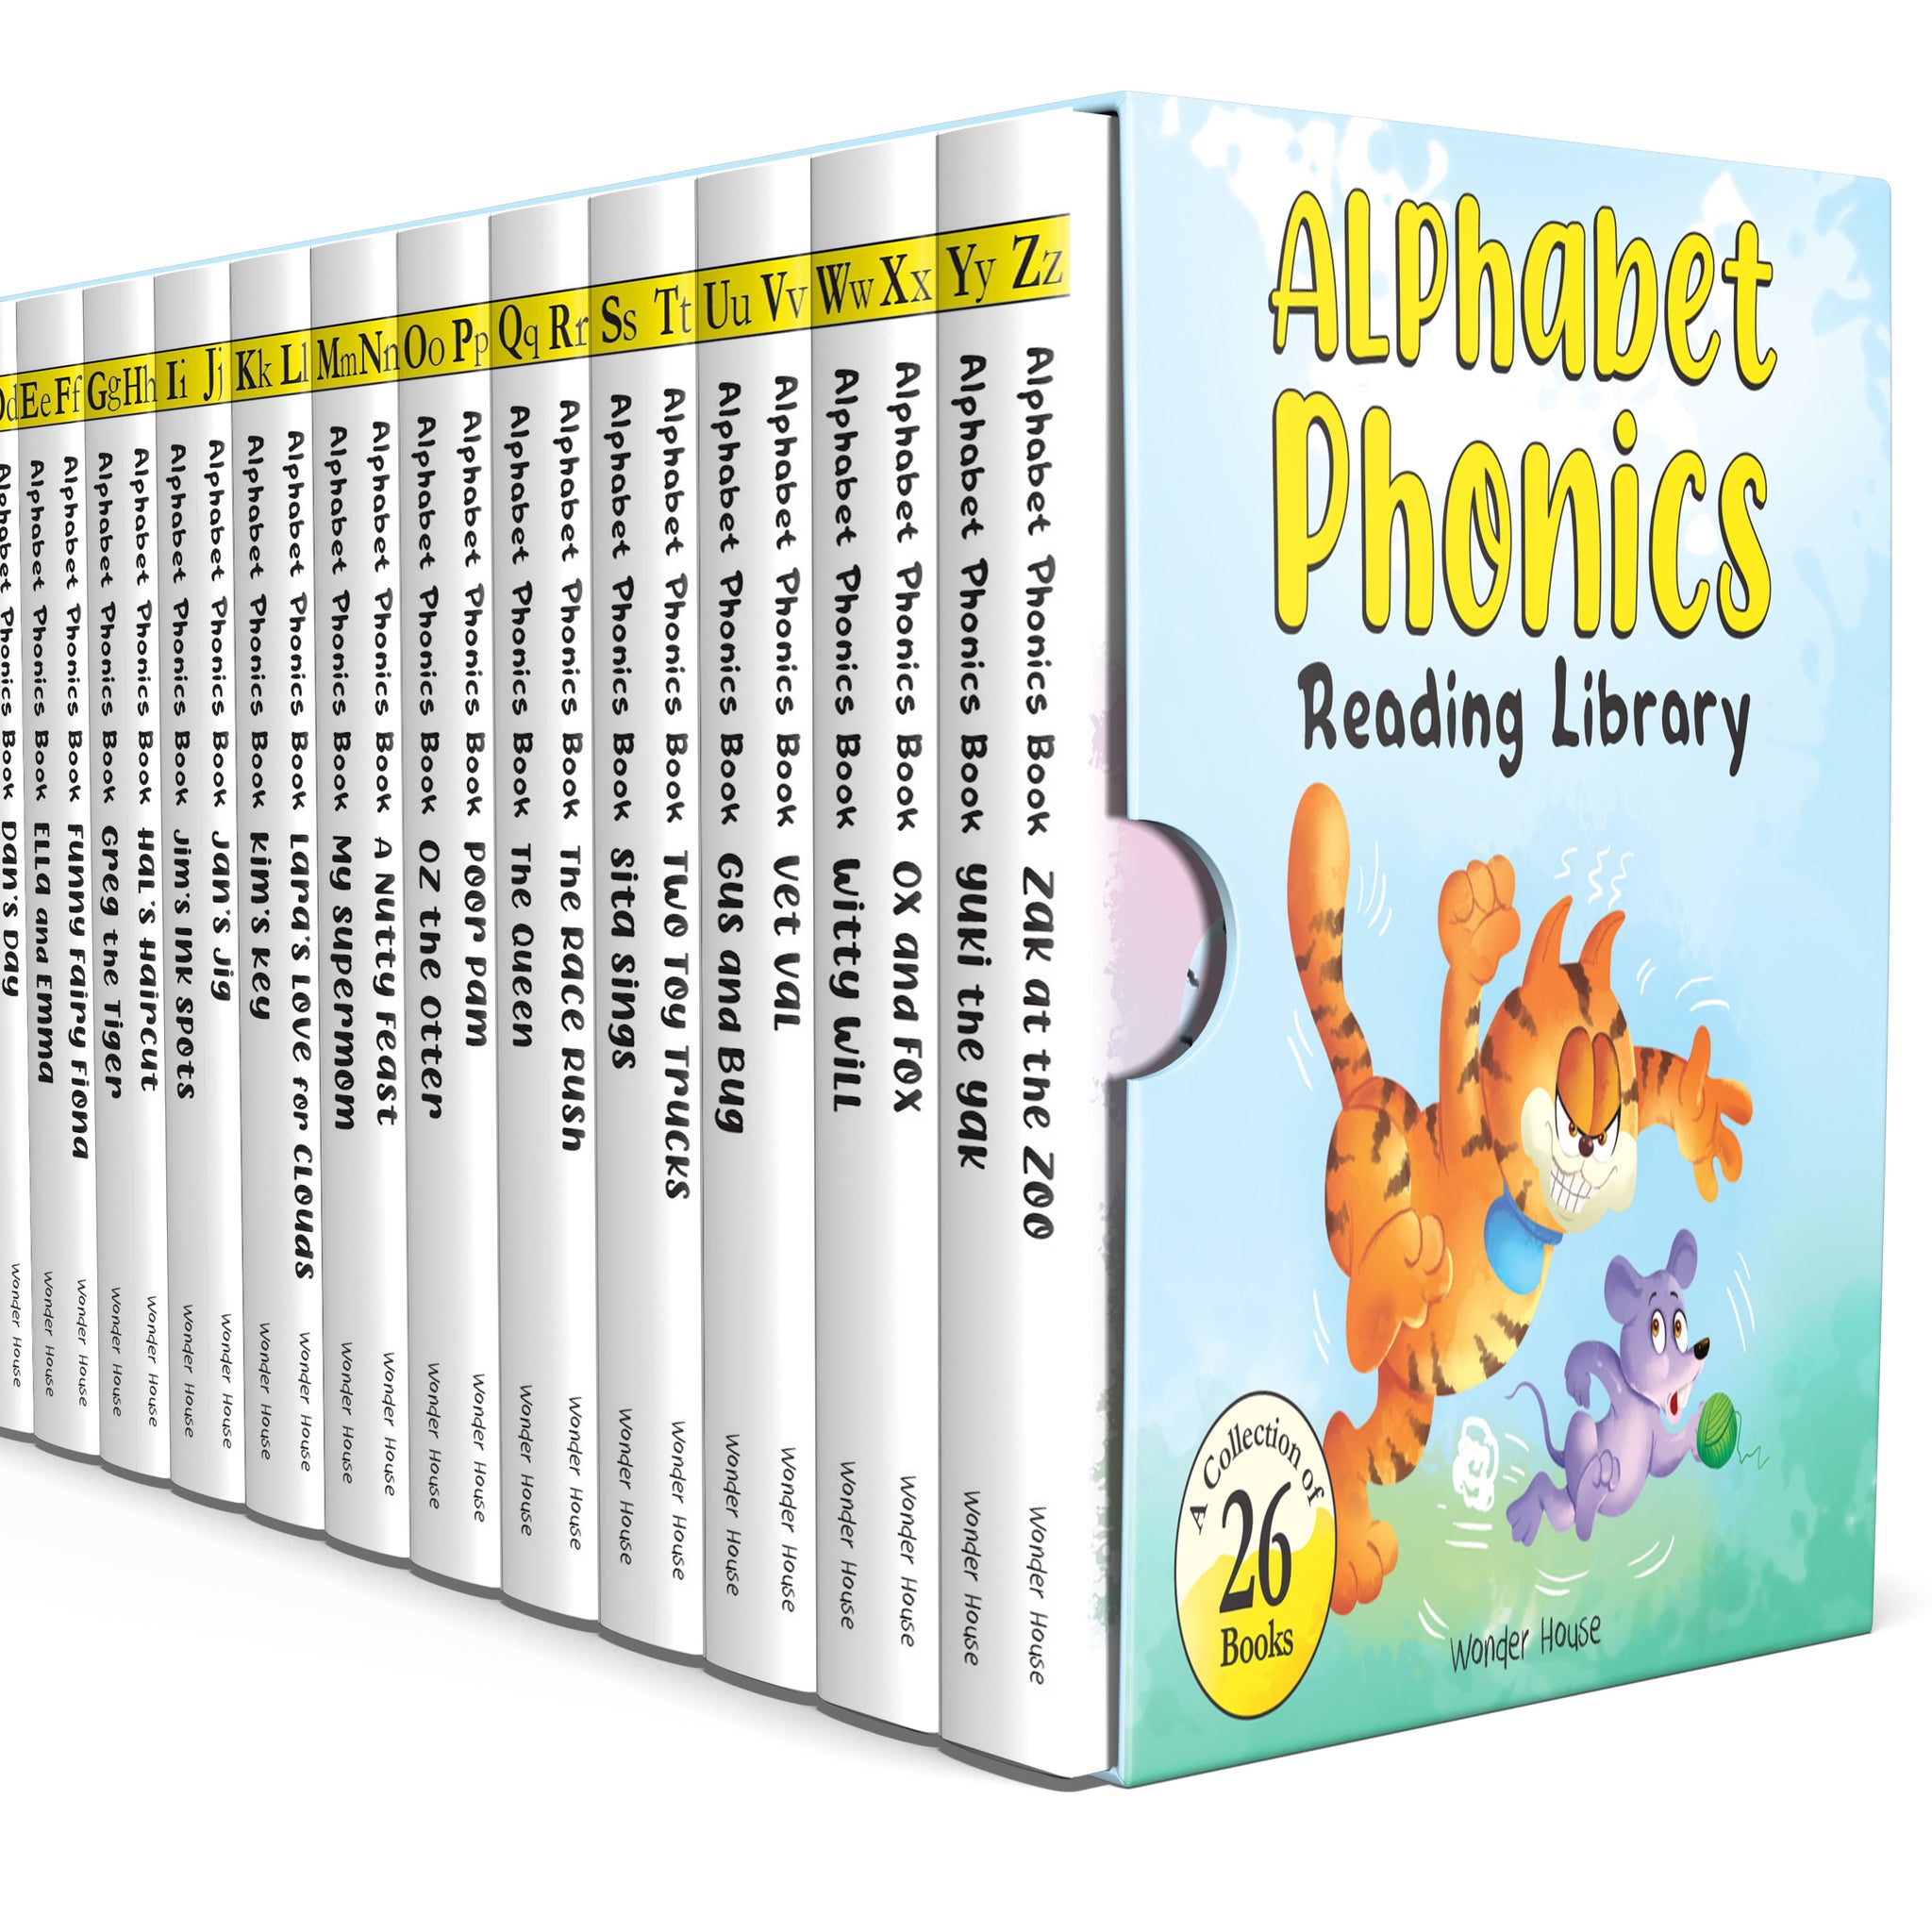 Alphabet Phonics - Reading Library For Children (Boxset of 26 books)